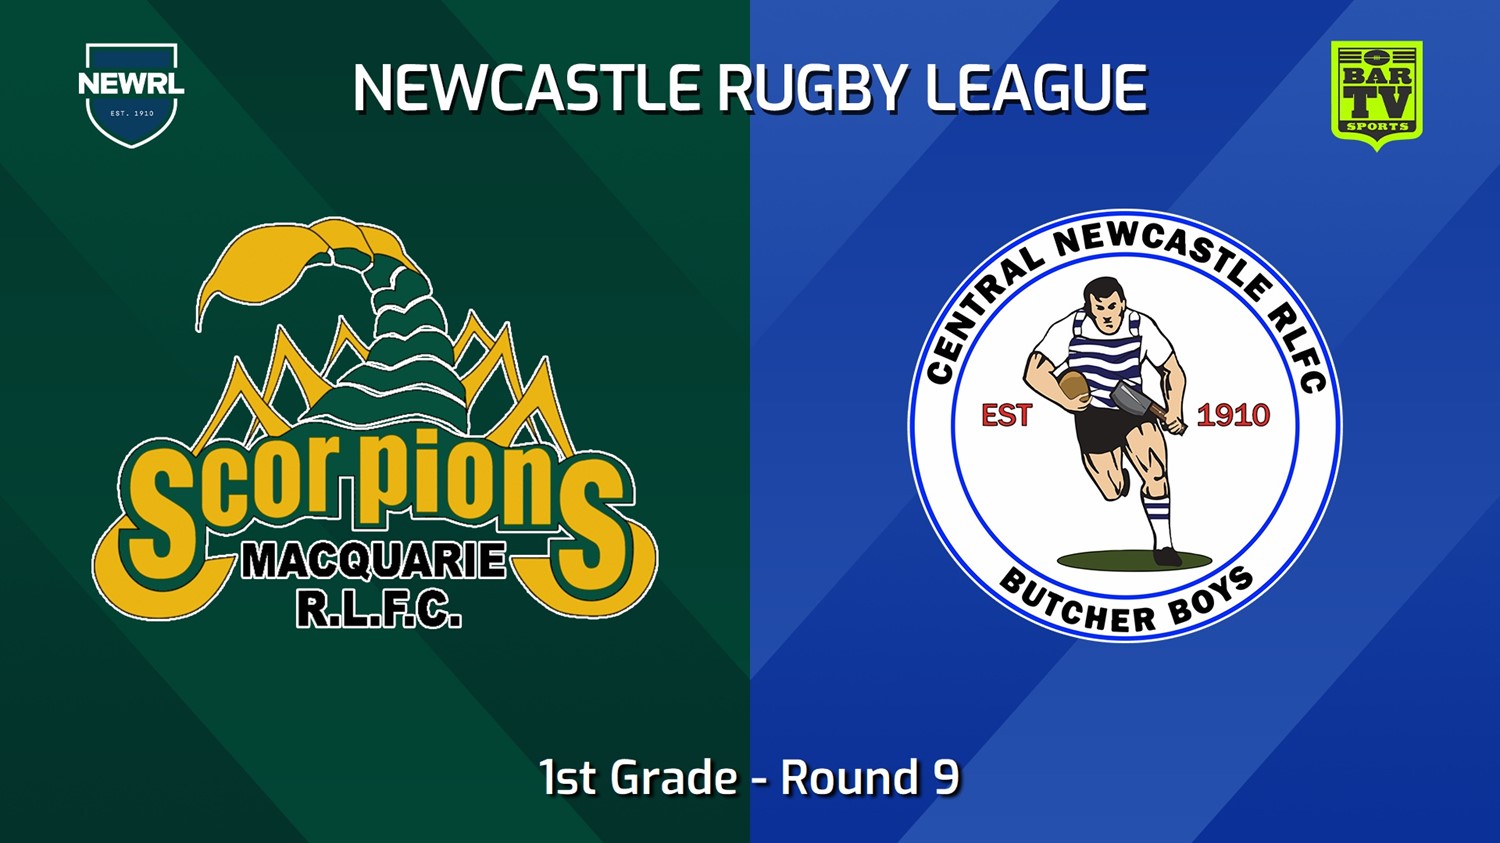 240618-video-Newcastle RL Round 9 - 1st Grade - Macquarie Scorpions v Central Newcastle Butcher Boys Slate Image